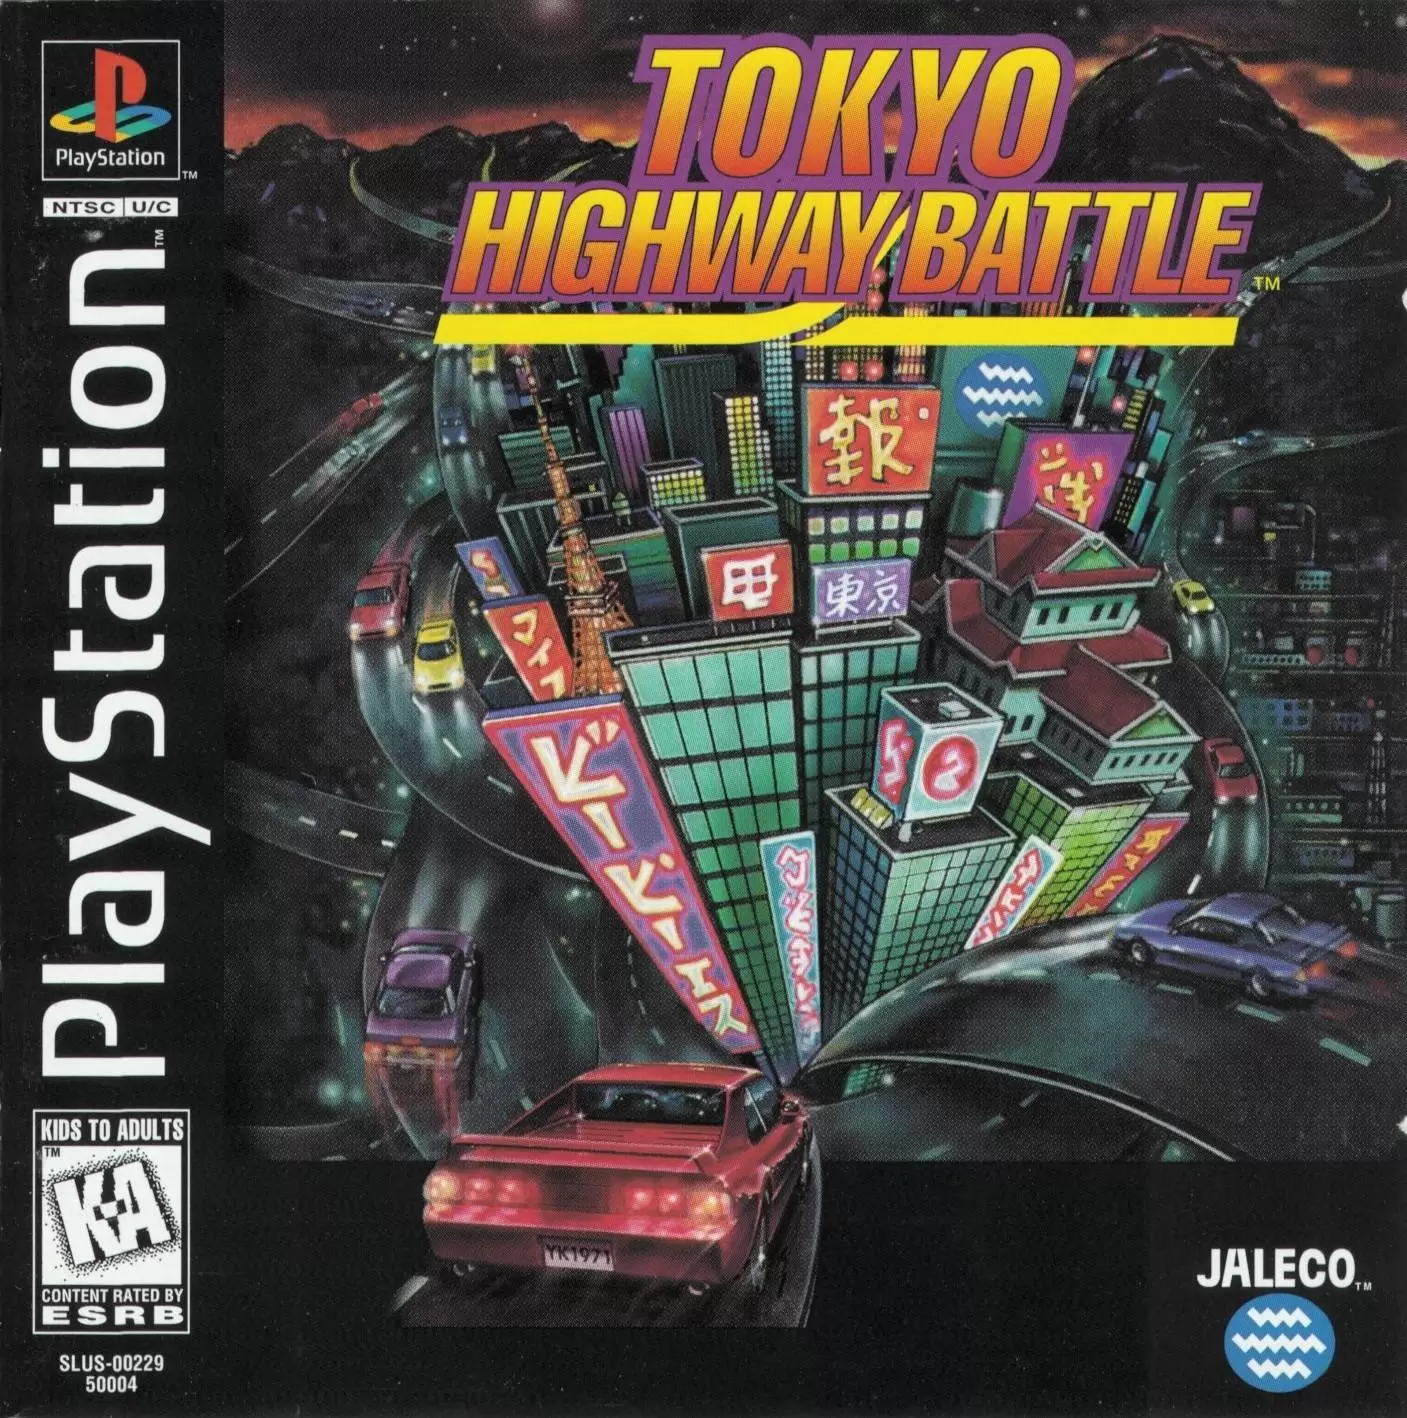 Playstation games - Tokyo Highway Battle